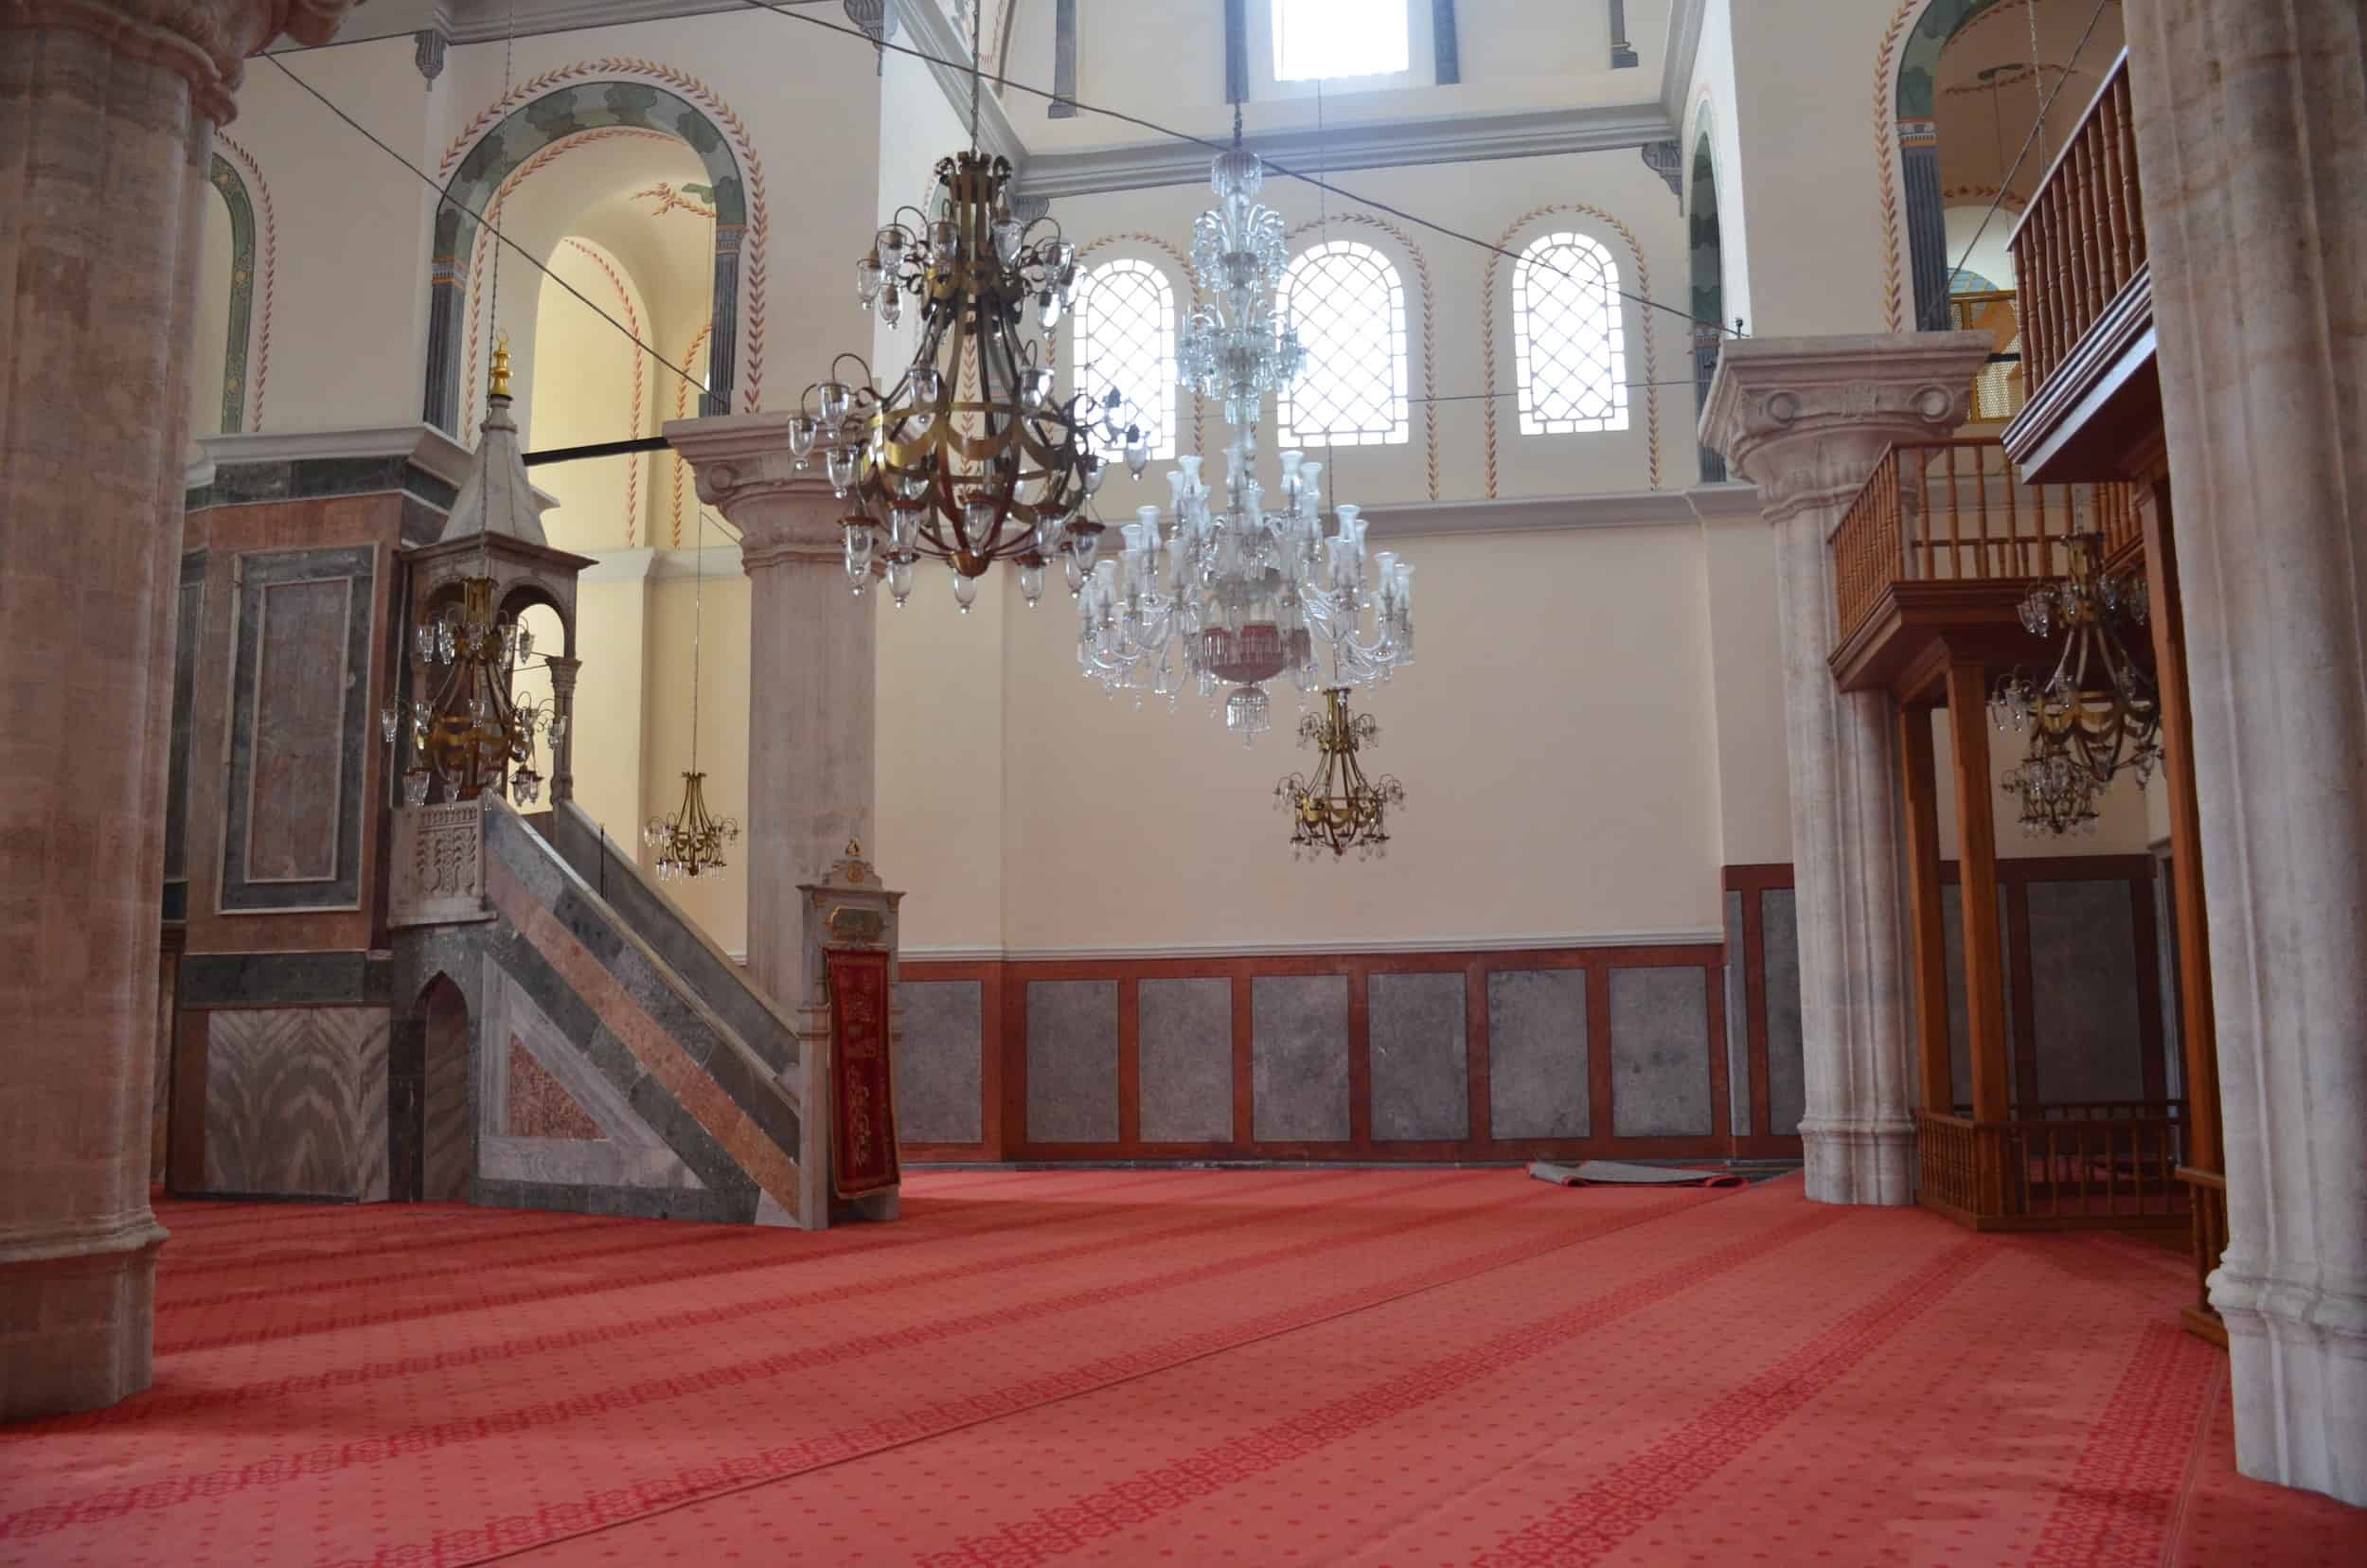 South church of the Zeyrek Mosque in Zeyrek, Istanbul, Turkey